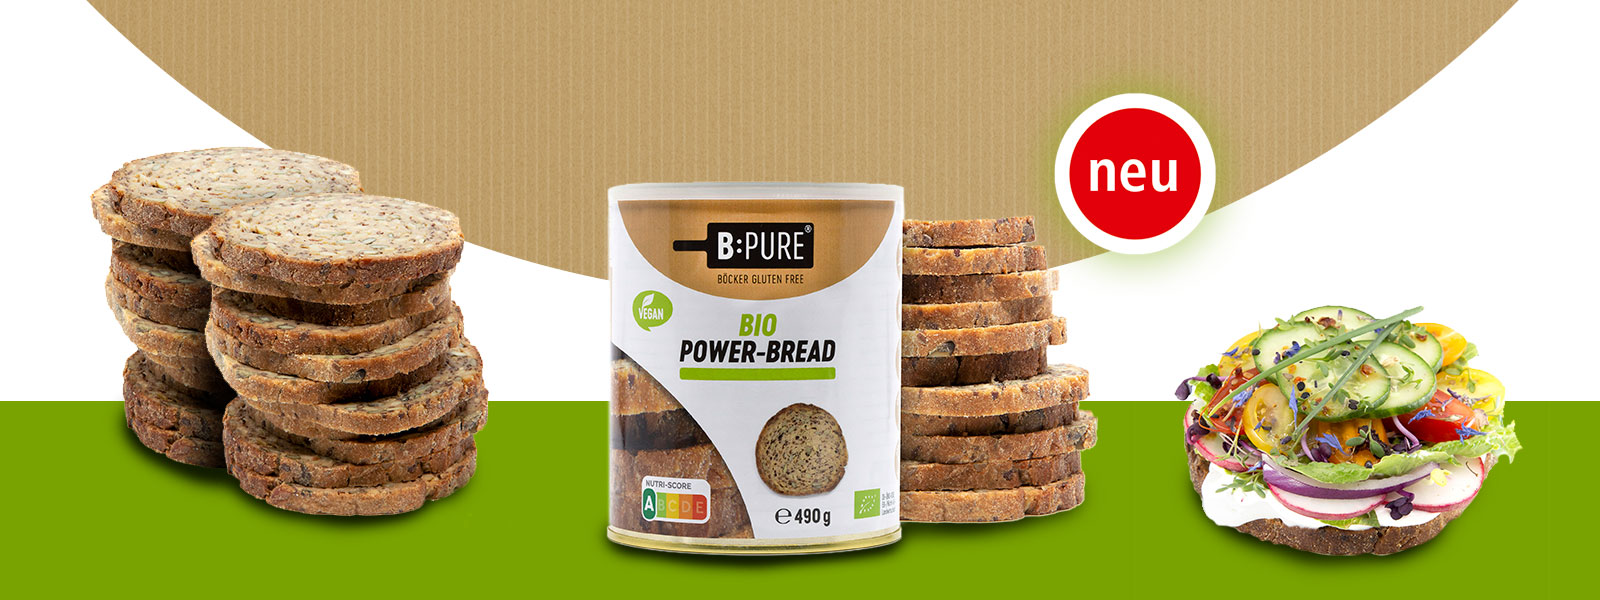 NEU: B:PURE Bio Power-Bread